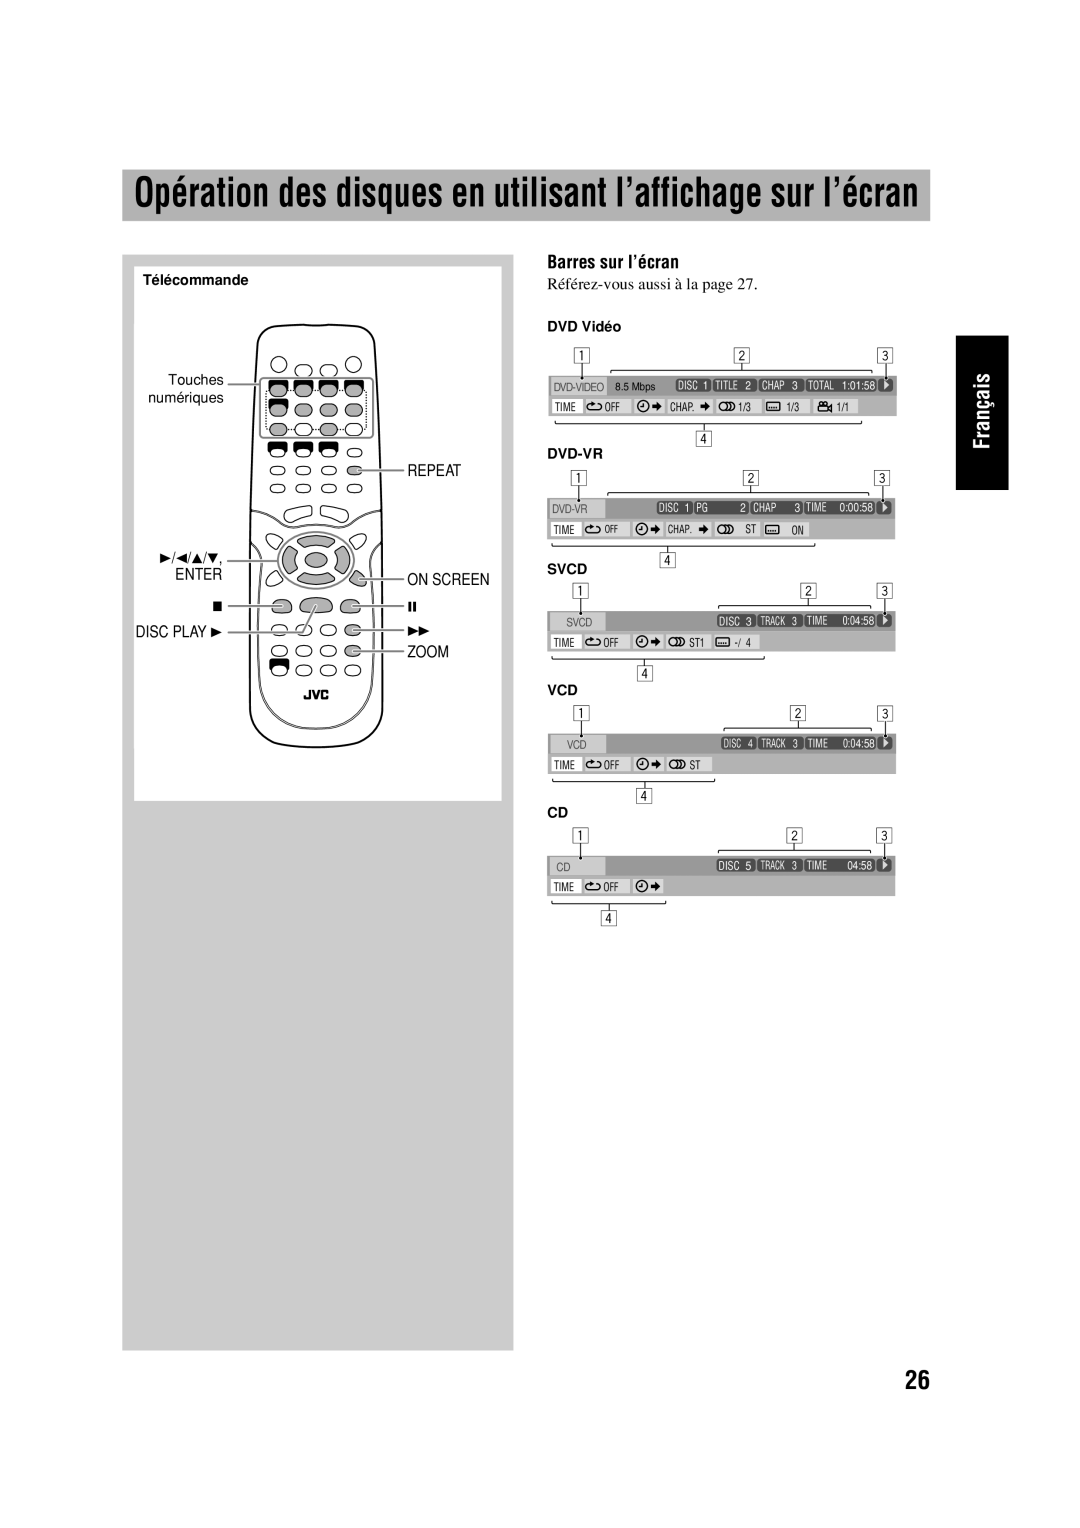 JVC CA-HXD77, SP-HXD77 manual Barres sur l’écran, Français, Enter, Disc Play, Repeat On Screen, Zoom 